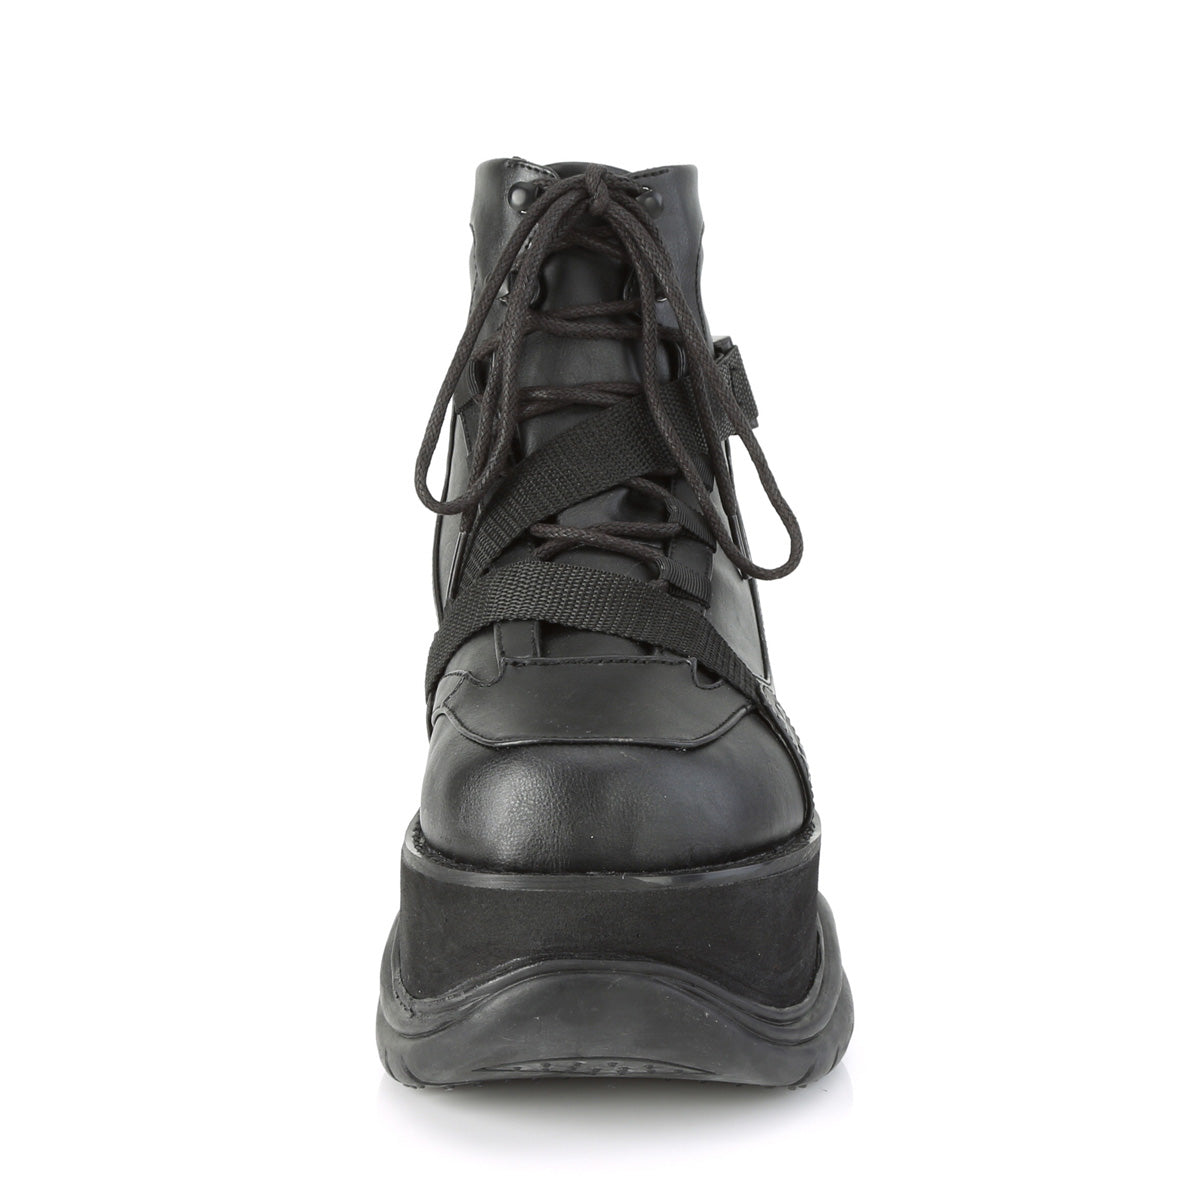 NEPTUNE-181 Demonia Black Vegan Leather Unisex Platform Shoes & Boots [Demonia Cult Alternative Footwear]